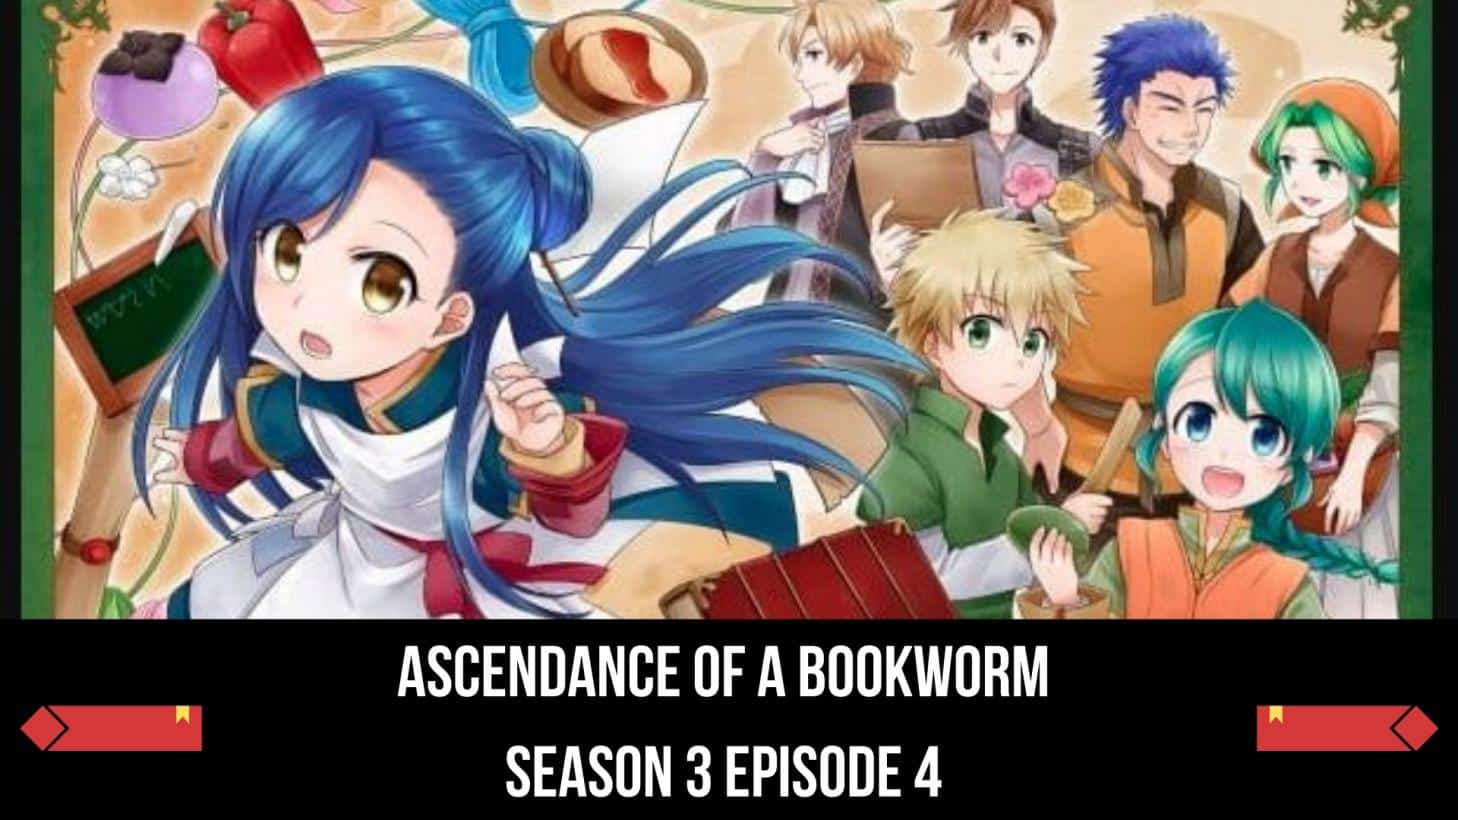 Ascendance of a Bookworm Season 3 Episode 4 Release Date